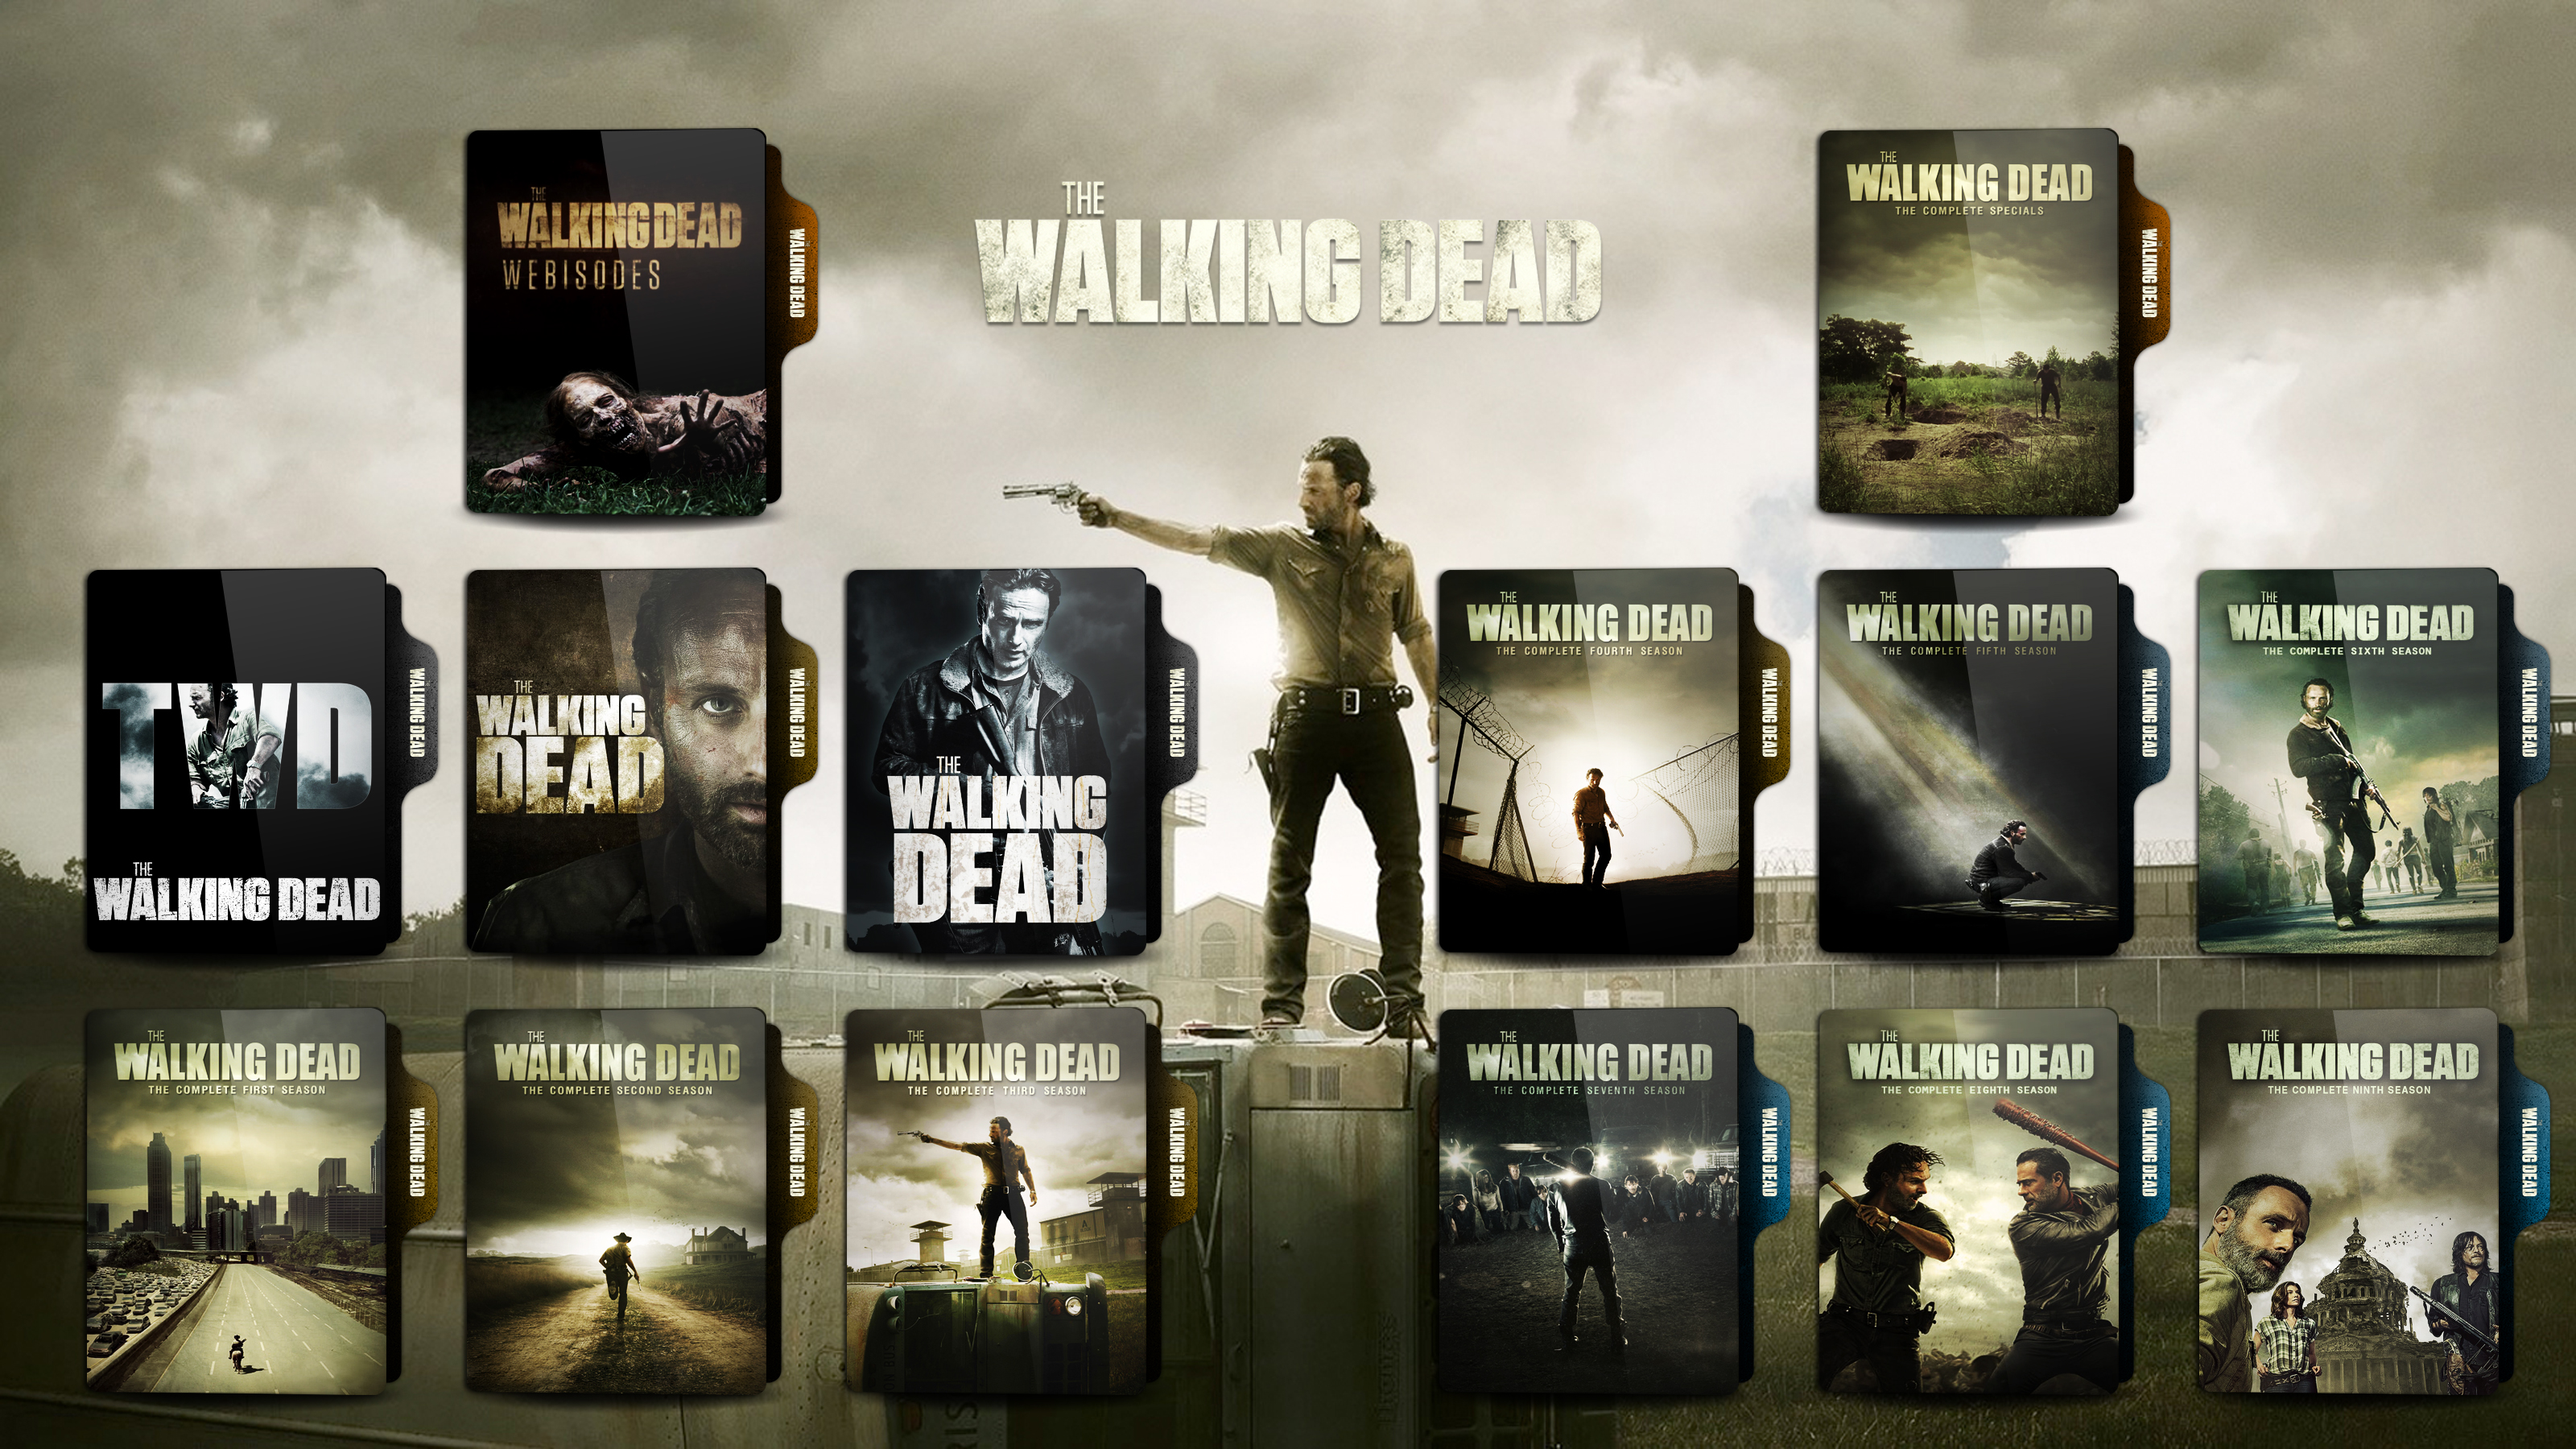 The Walking Dead Season 1 Poster by jevangood on DeviantArt